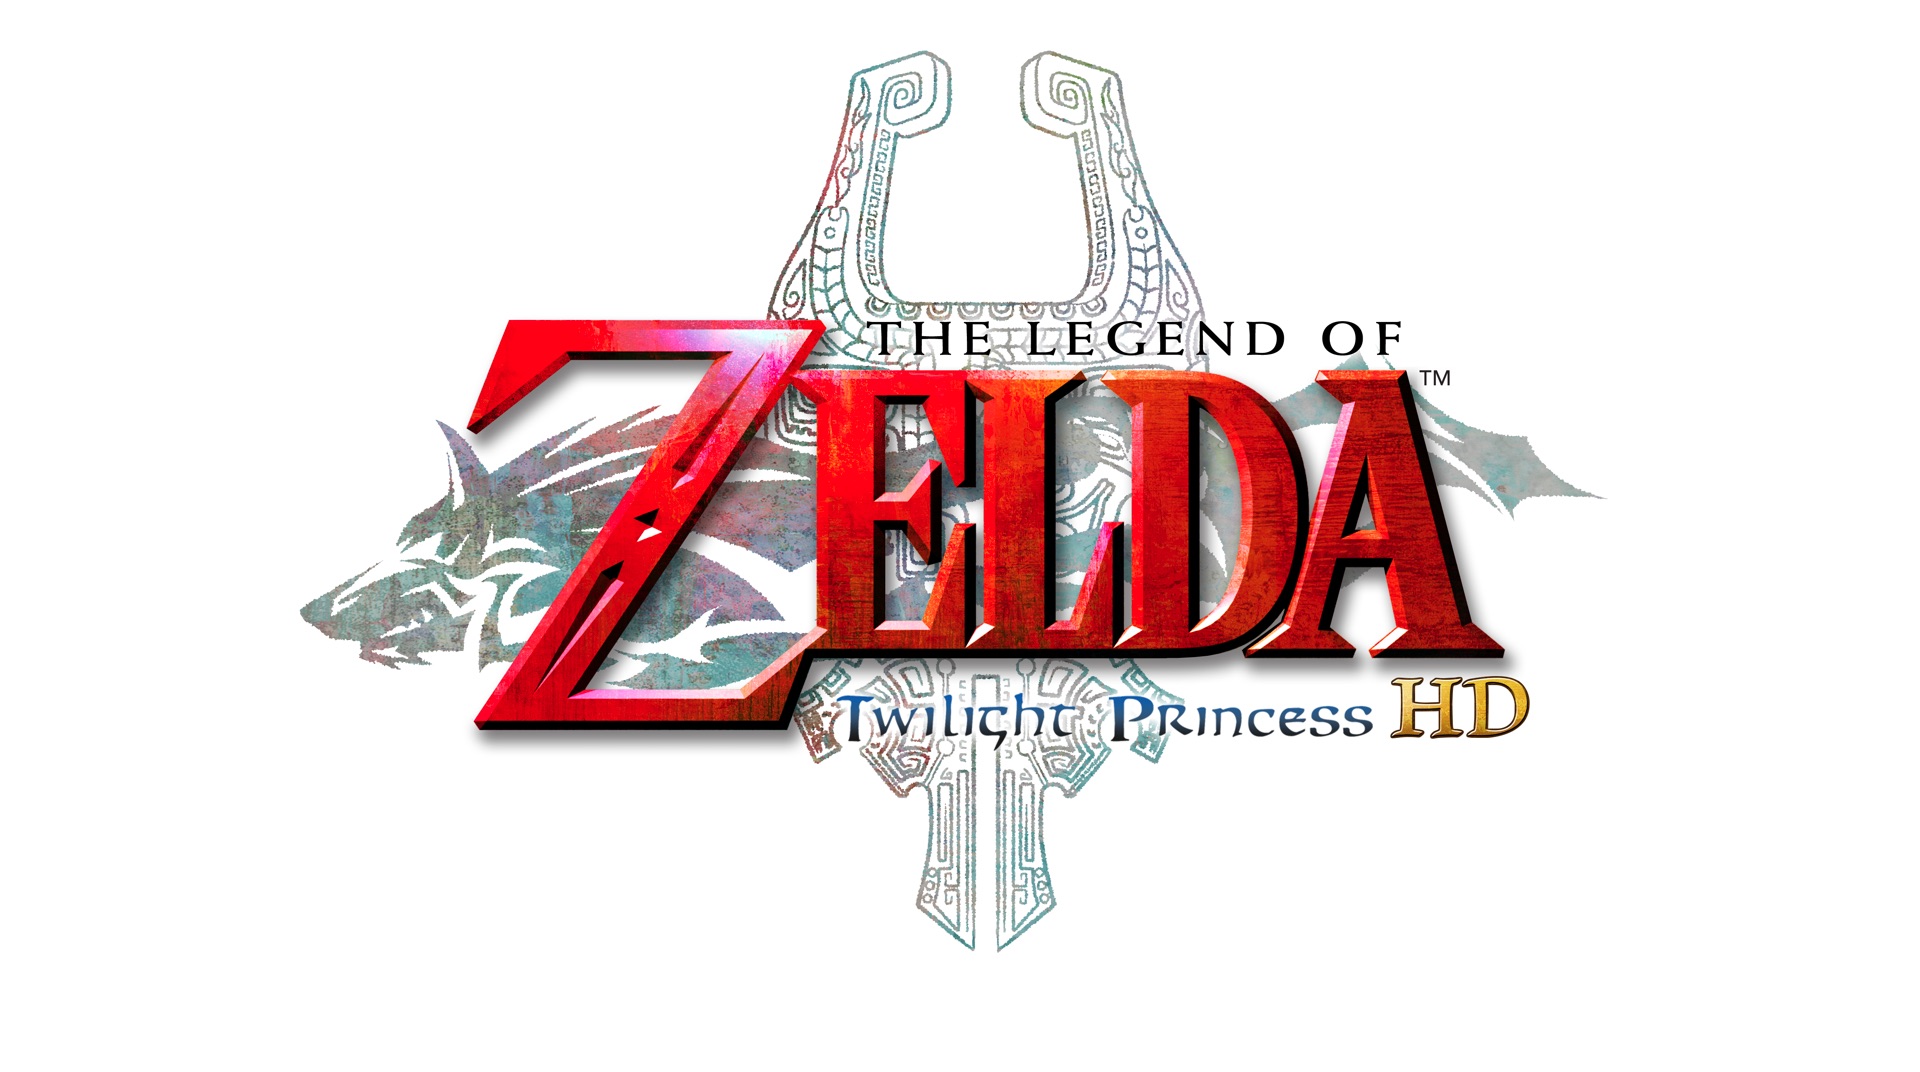 The legend of Zelda twilight princess hd